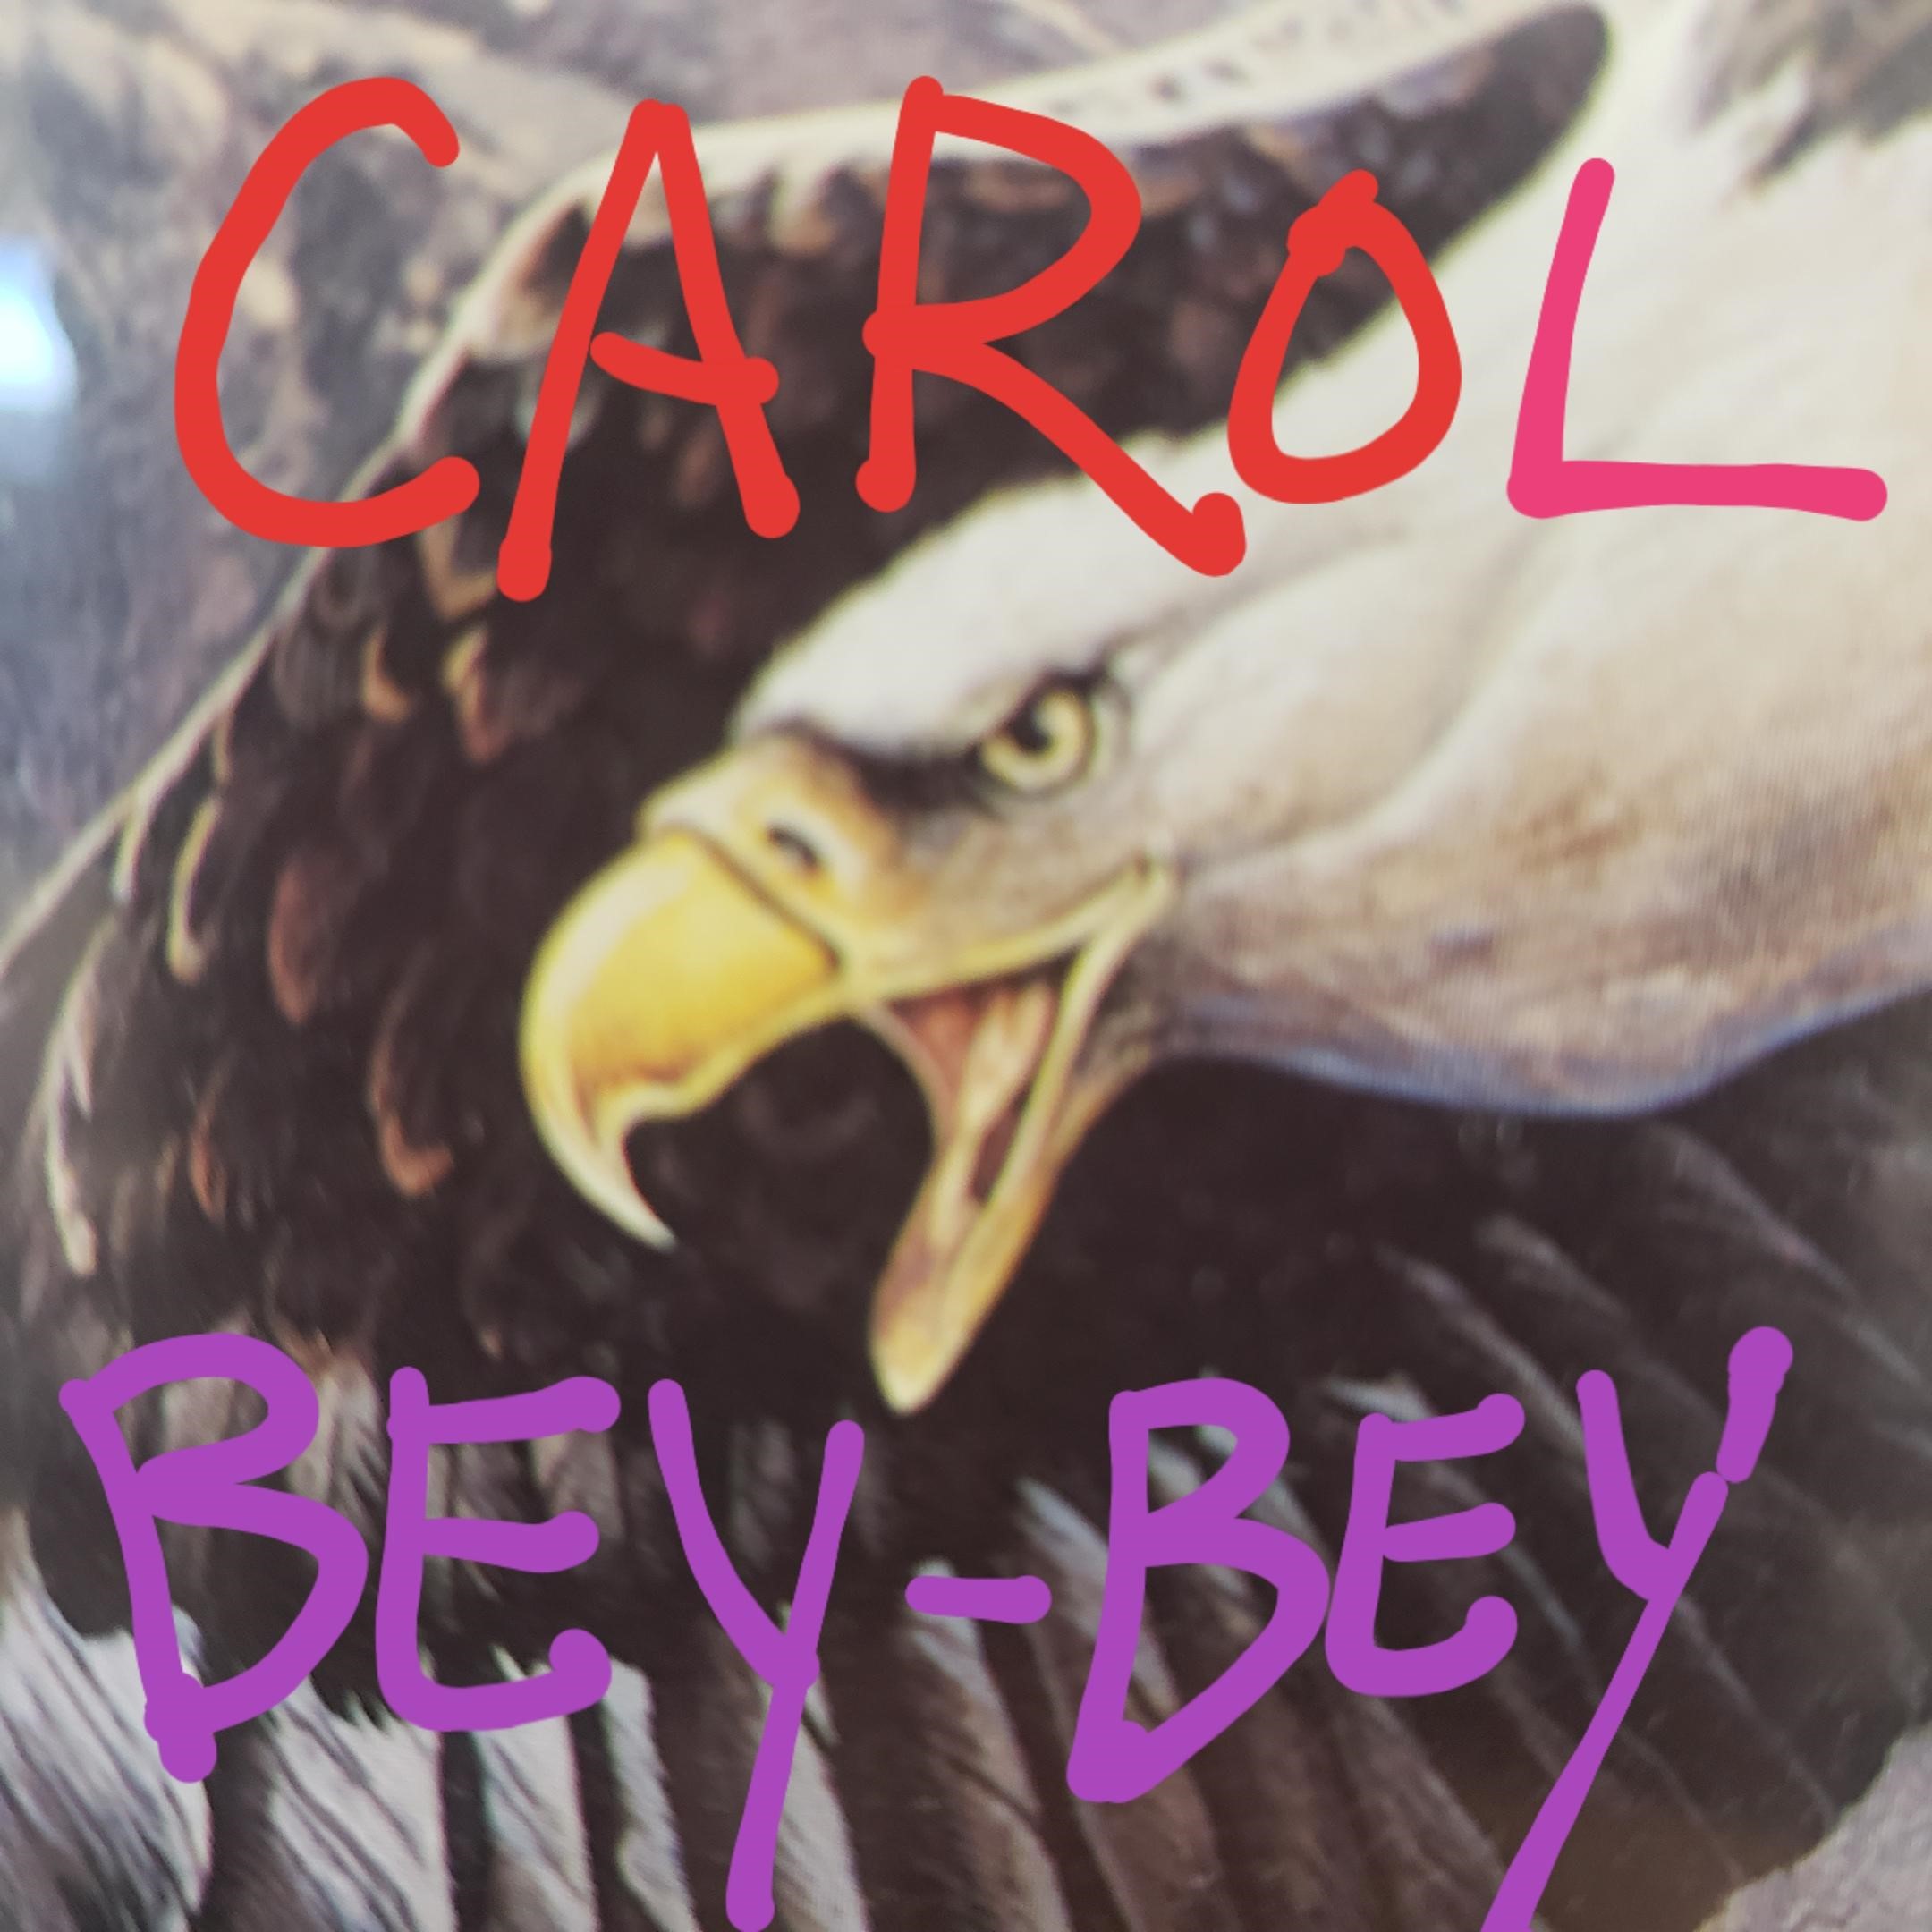 CAROL-BEY-BEY's avatar.